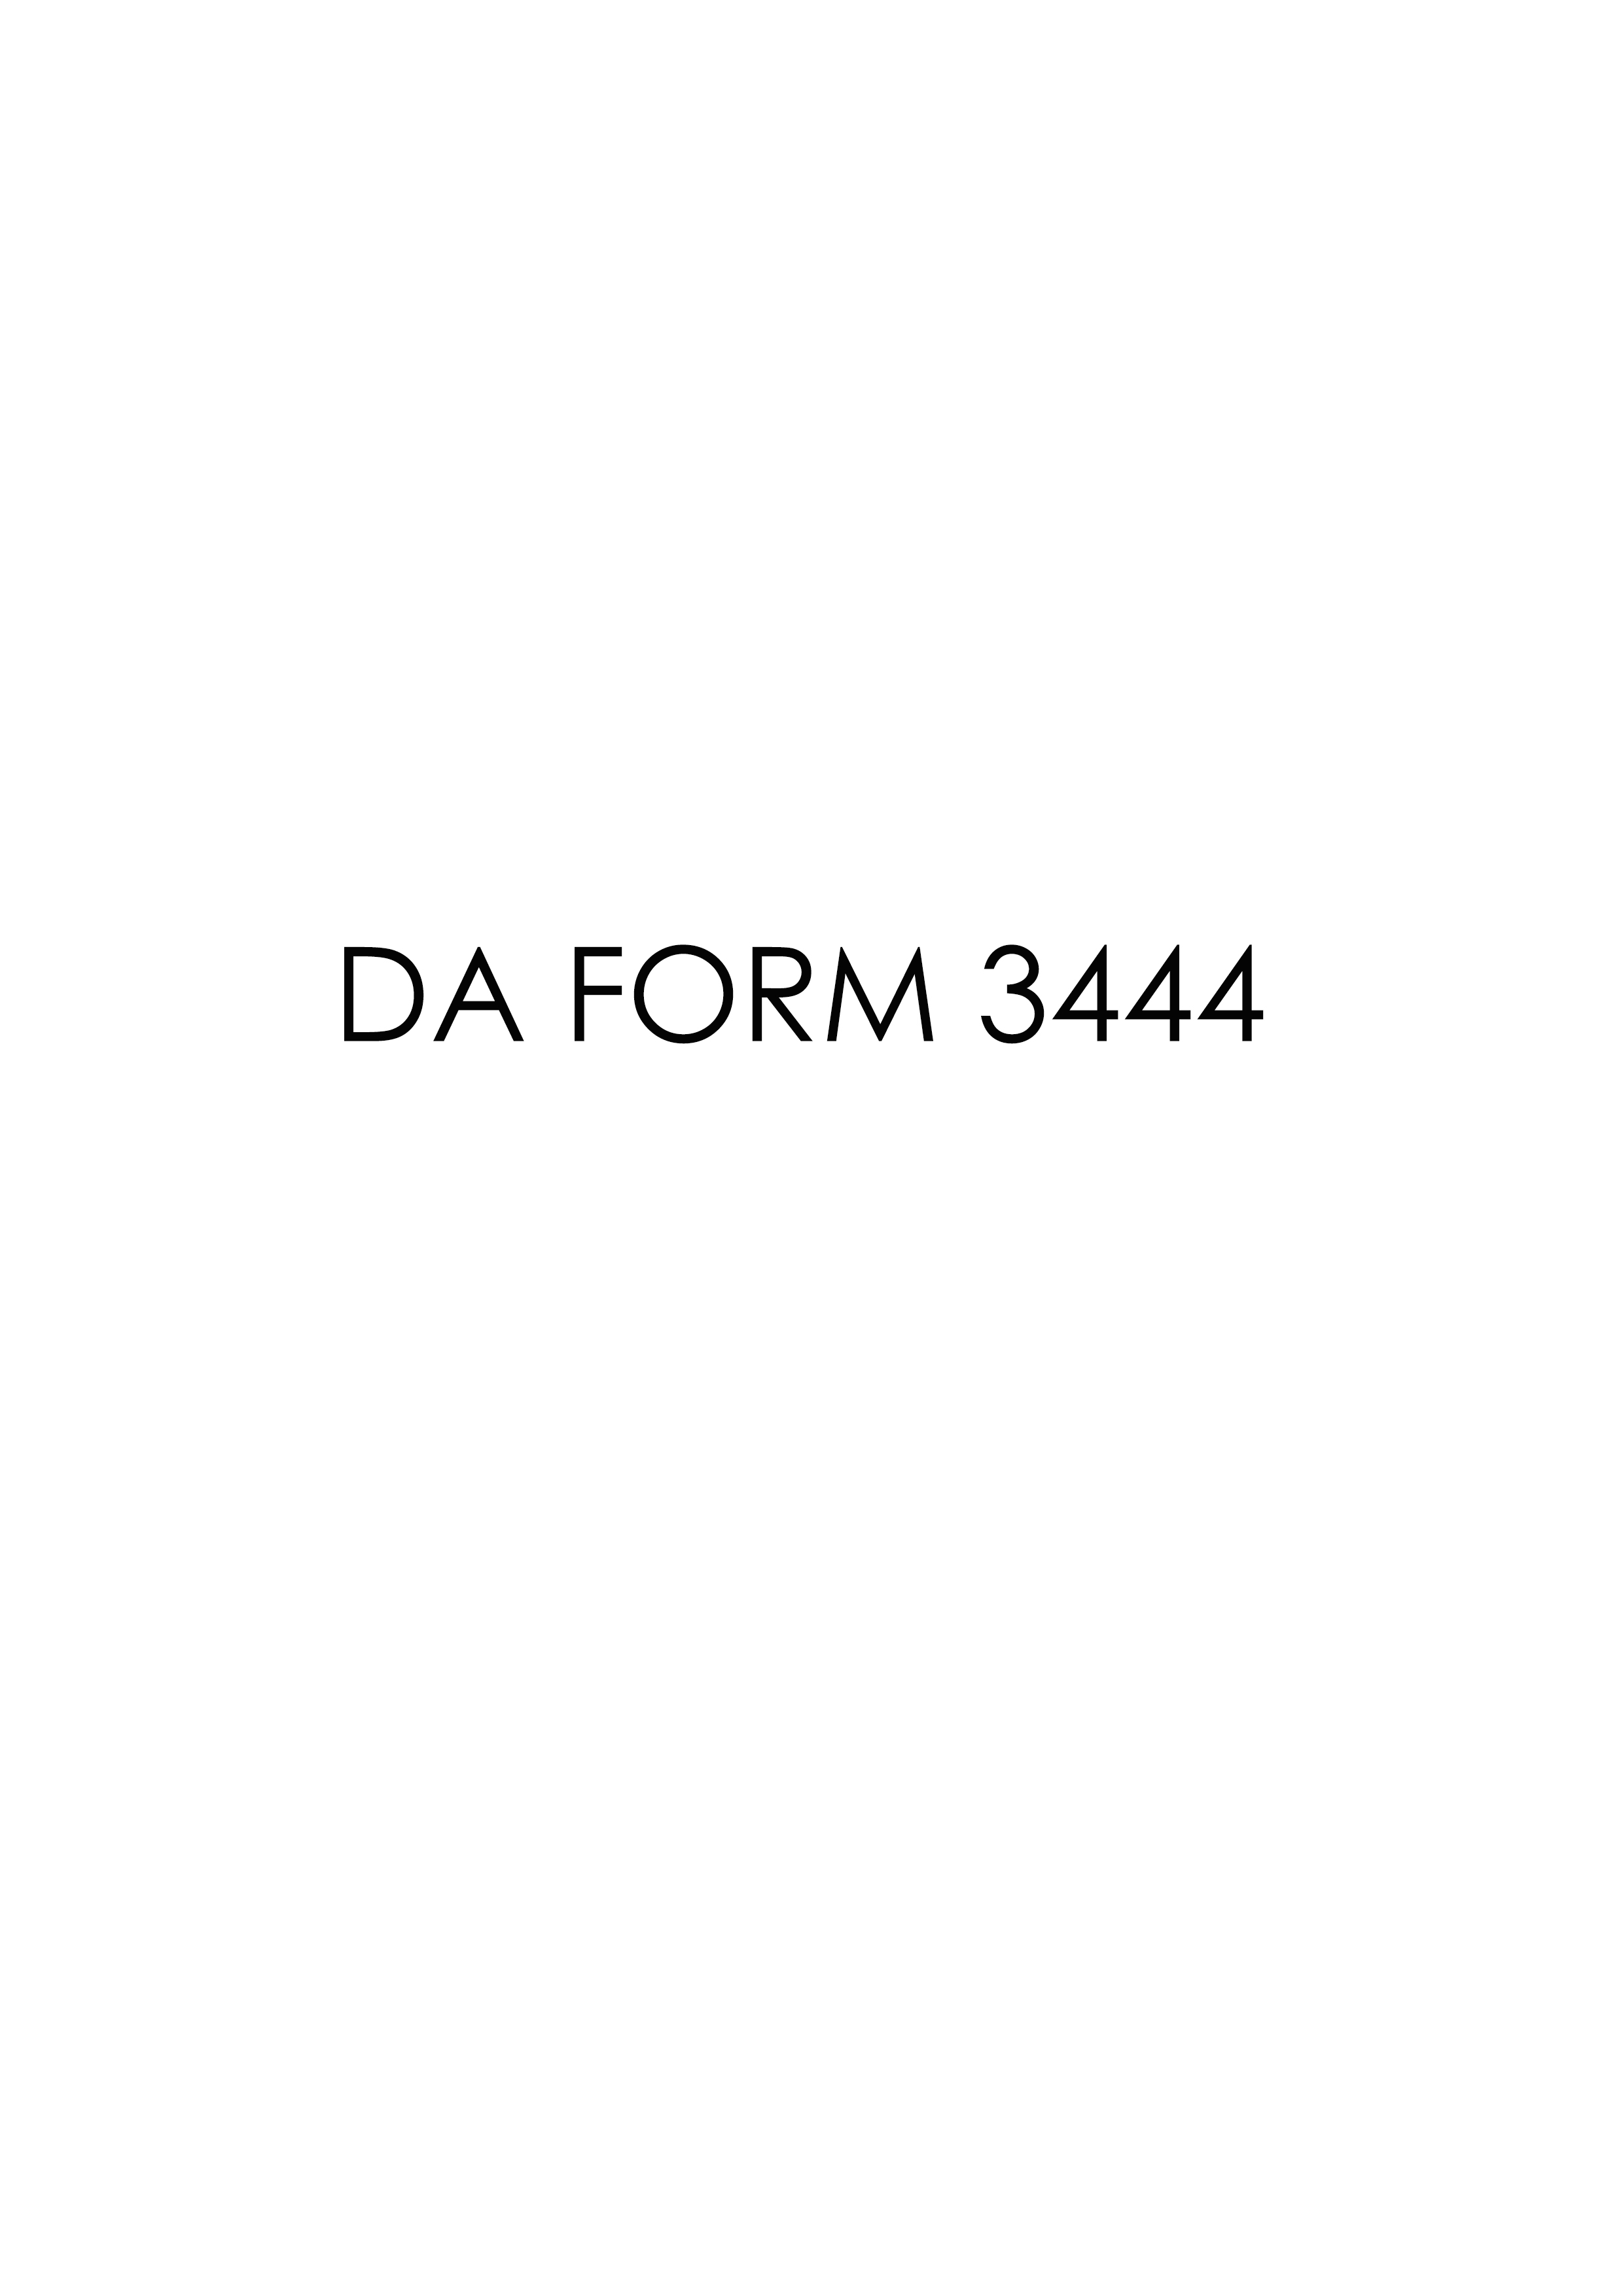 da Form 3444 fillable